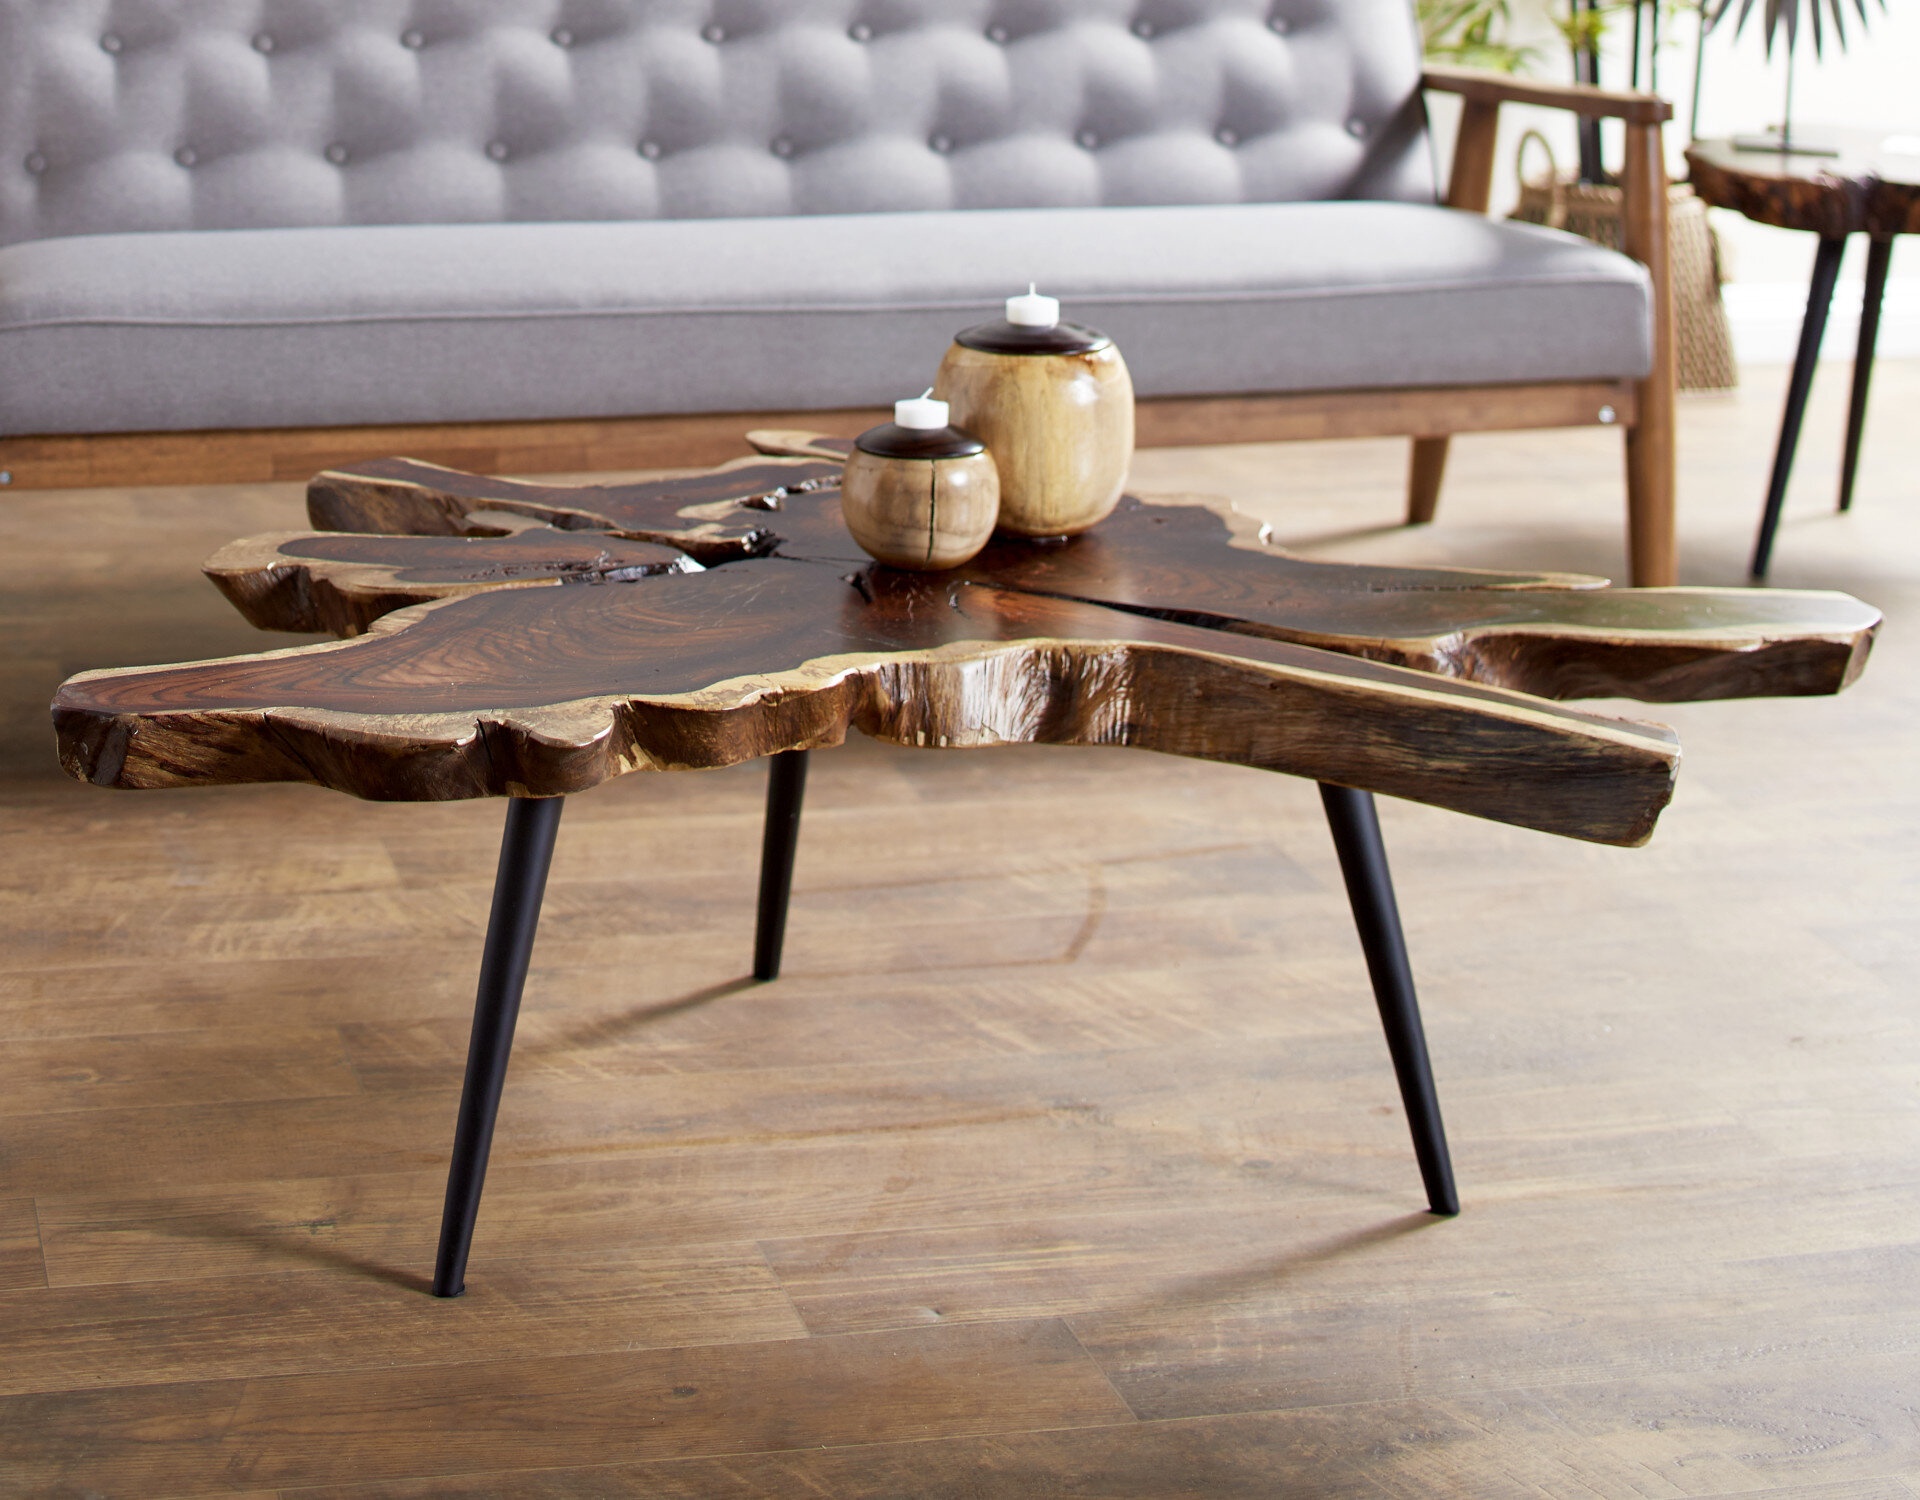 Coffee Table Tropical Hardwood, Live Edge Coffee Table, Wood